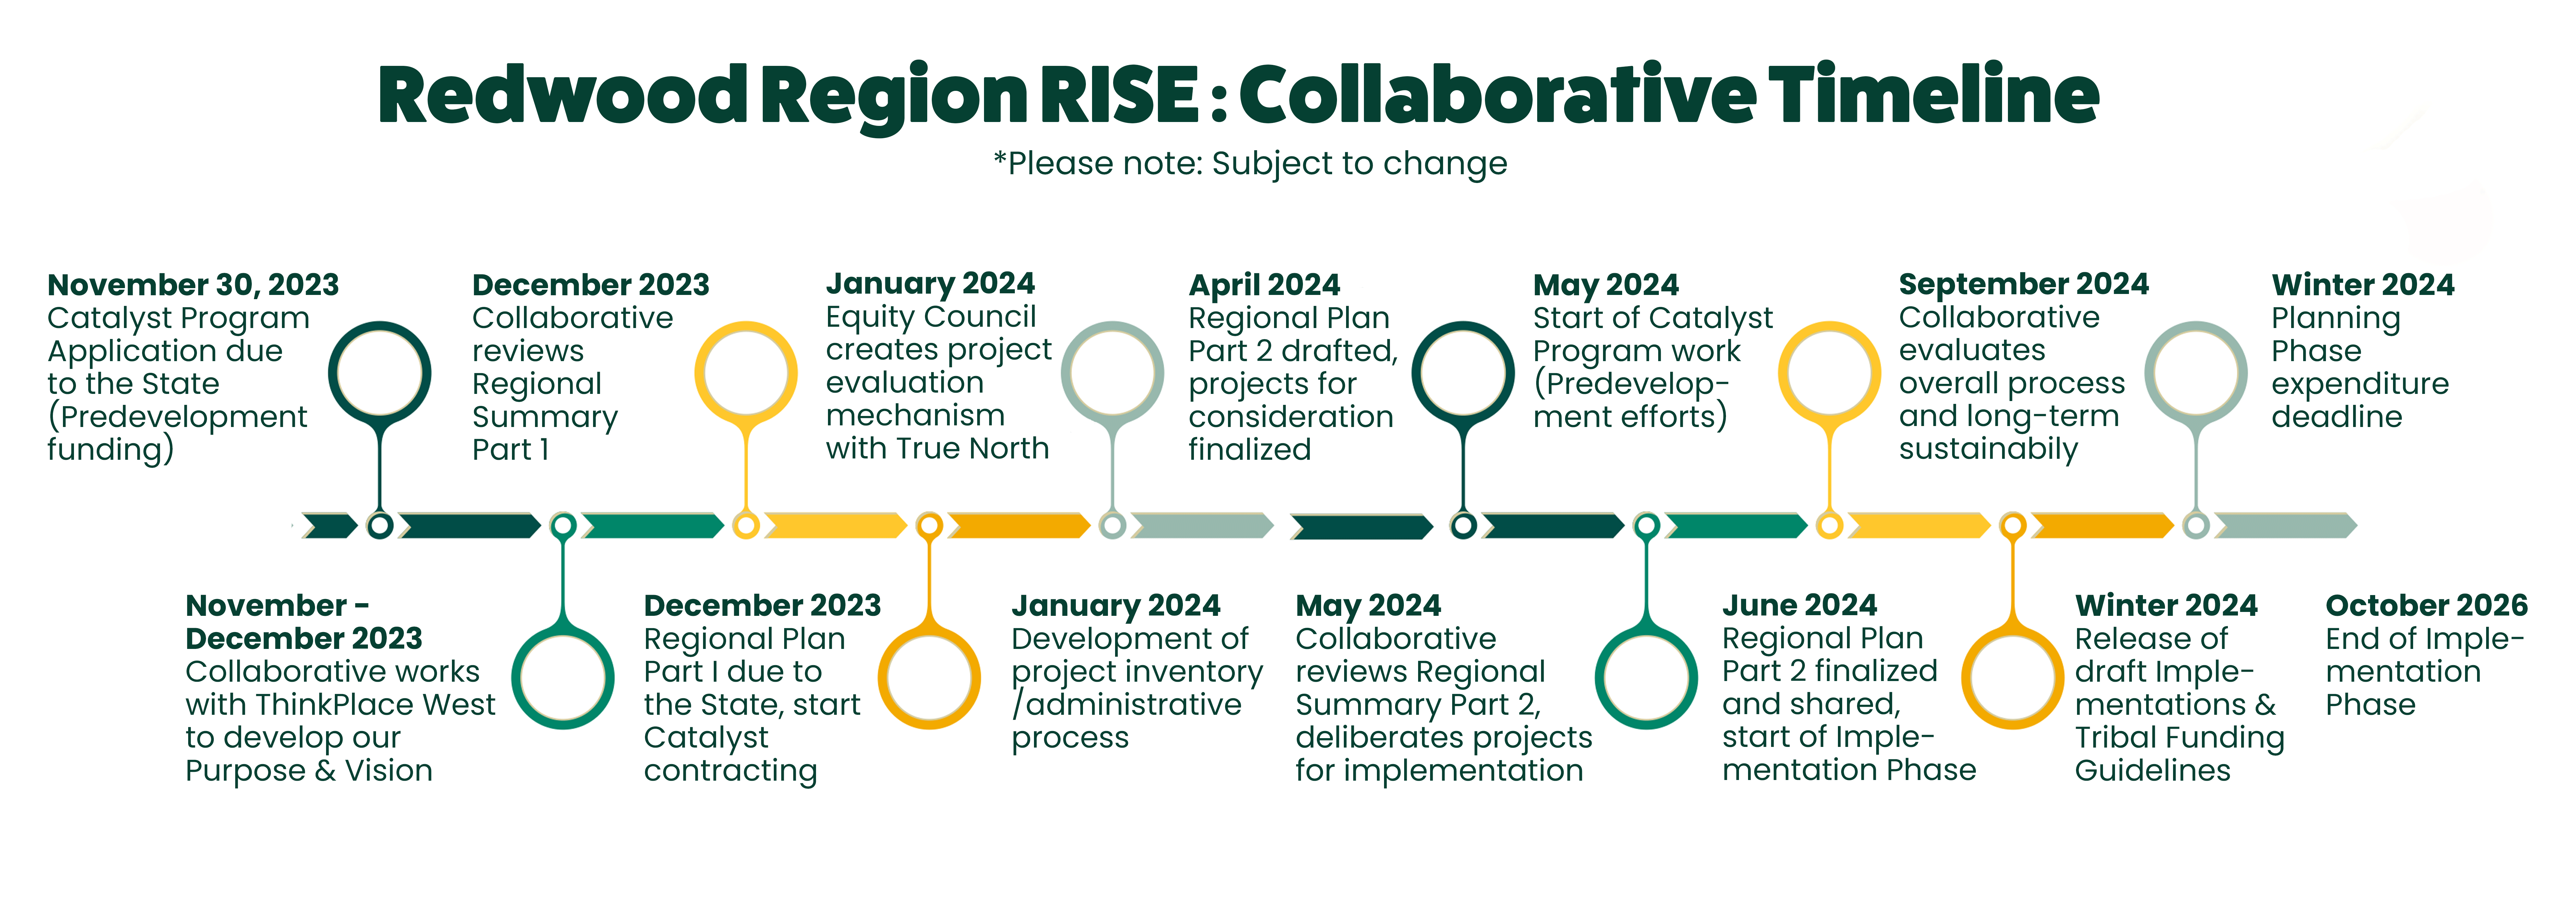 Redwood Region RISE - Timeline (zoomed in)